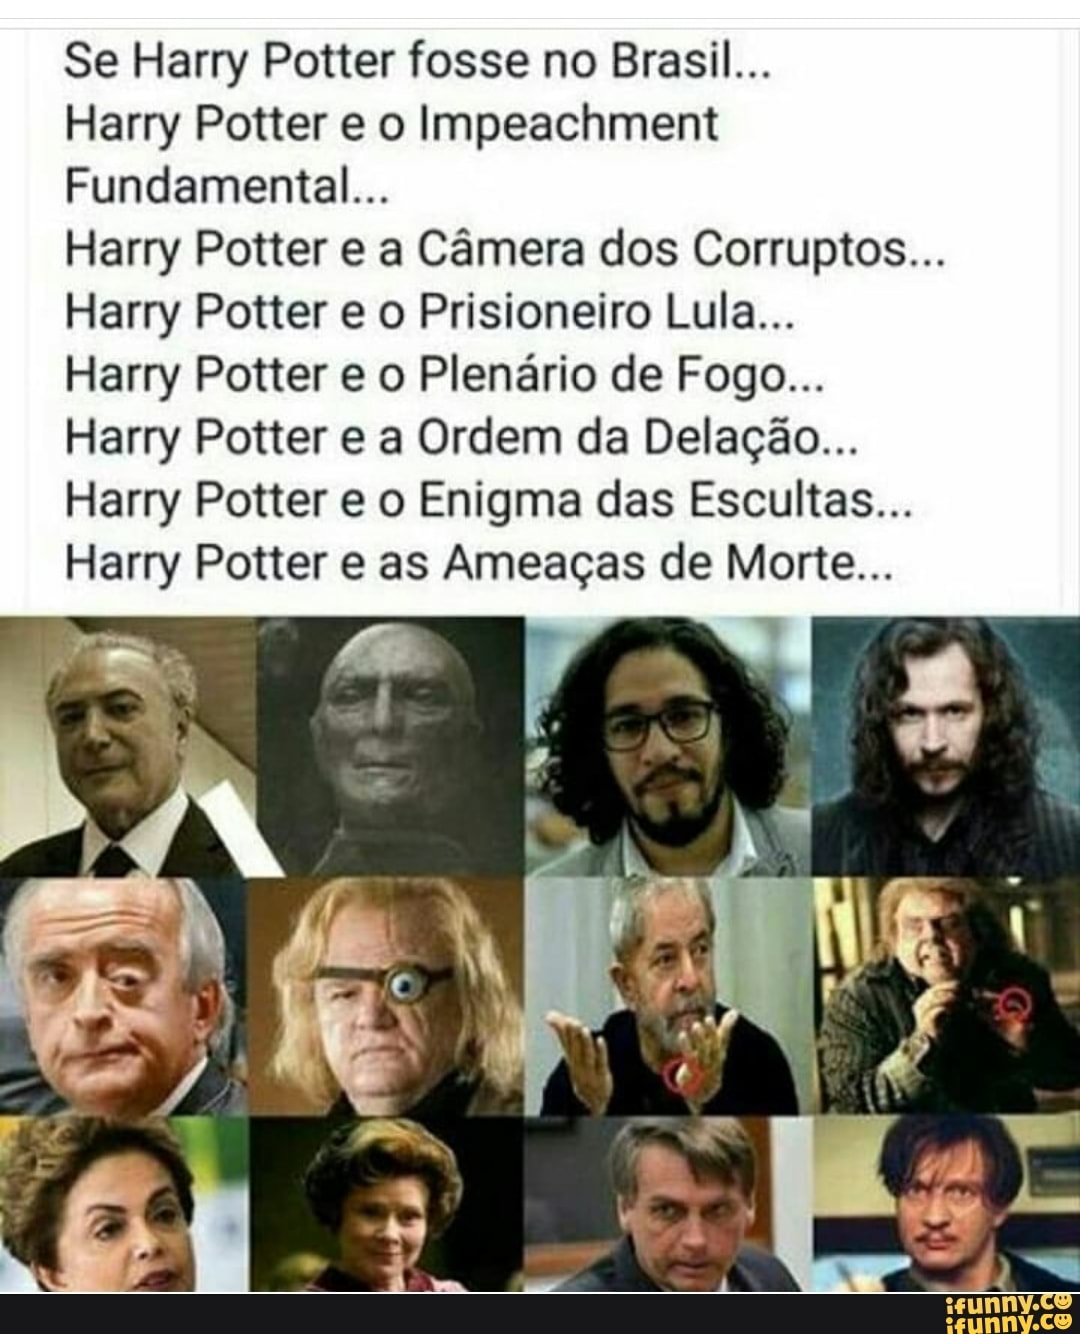 Fãs de Harry Potter - Brasil - Aí cê derrubou meu argumento